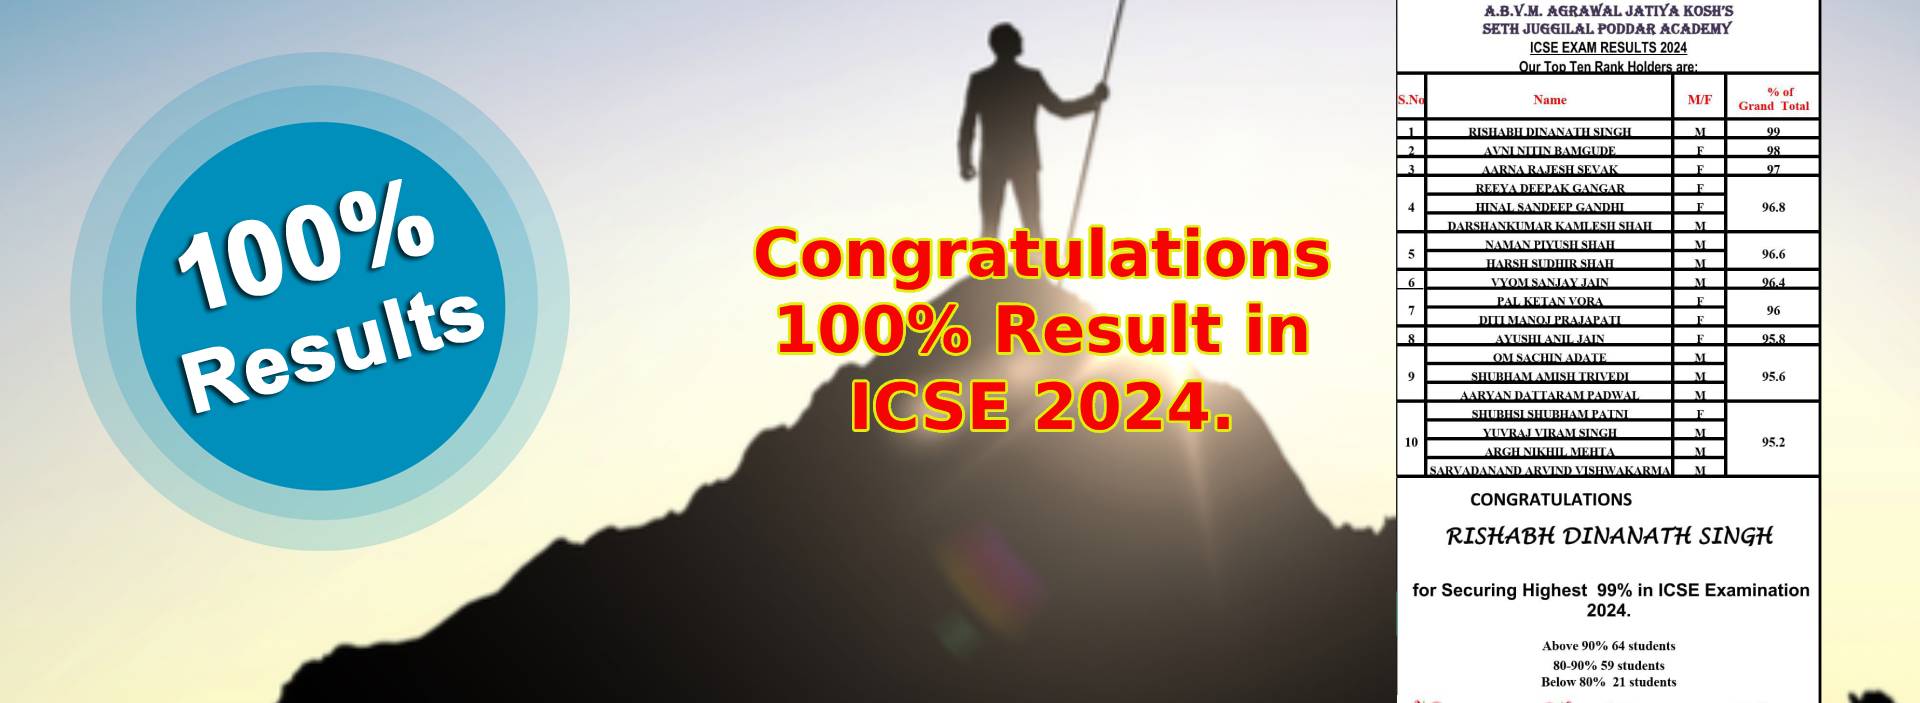 100 Percent results in ICSE 2024